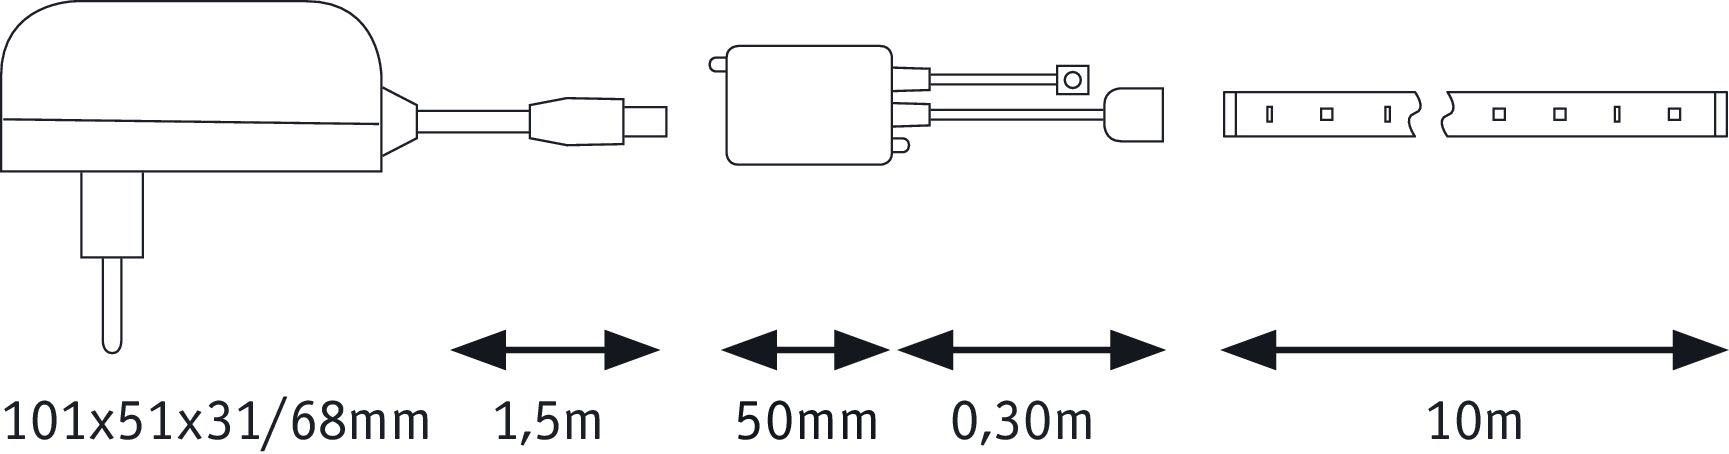 Paulmann LED beschichtet Stripe 10m Memoryfunktion 28W, mit Set dimmbar SimpLED 1-flammig, RGB Fernbedienung, bunt